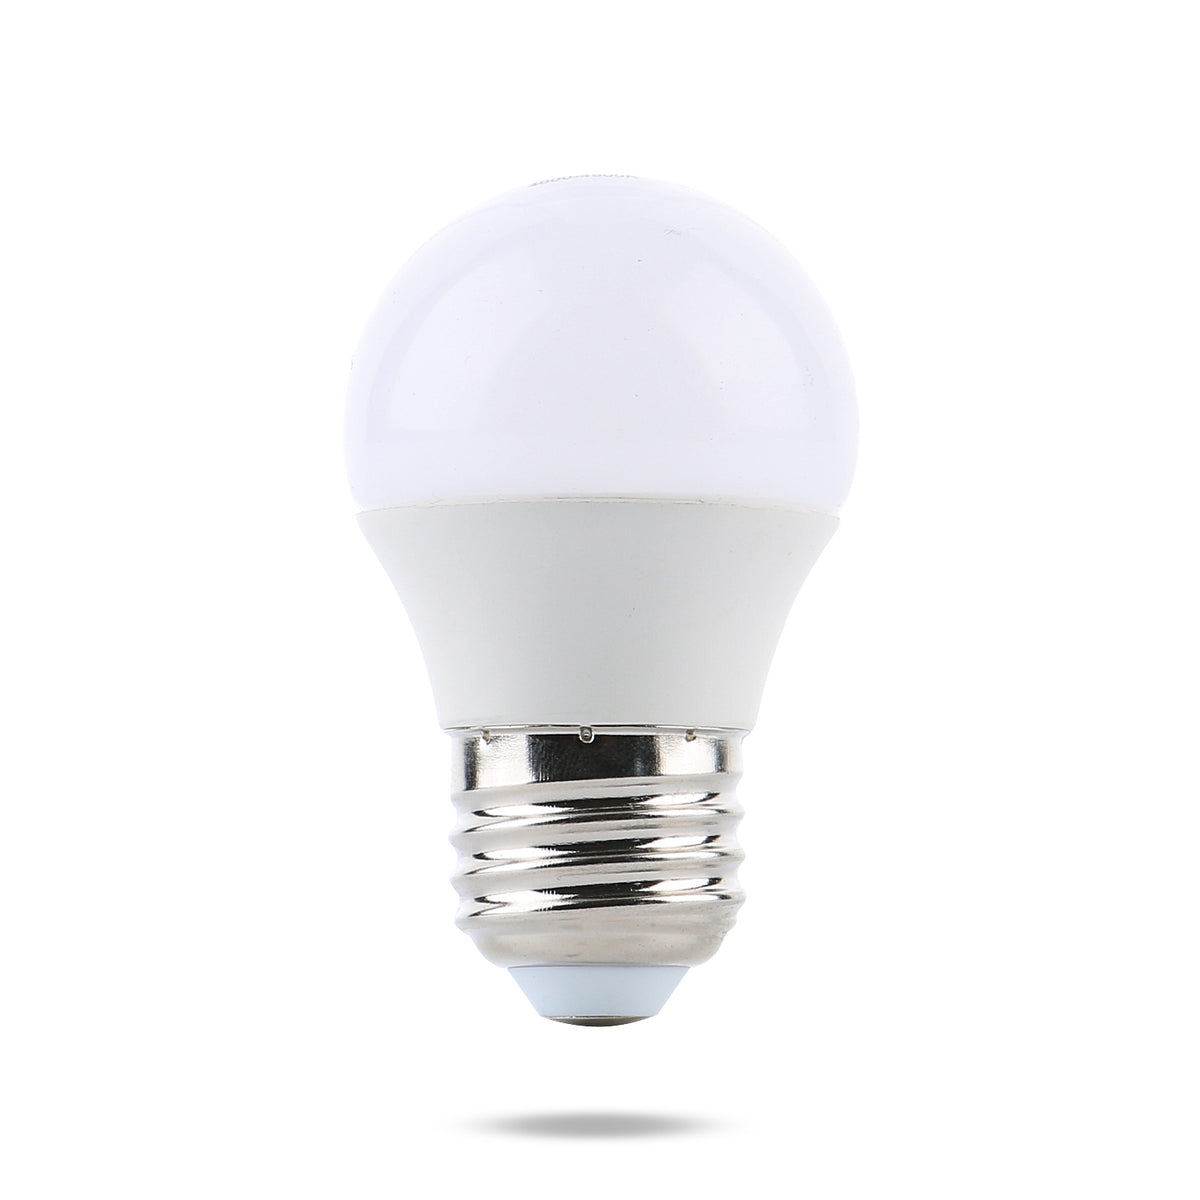 overgive Hula hop Tyggegummi 1 Watt LED Bulb | 12V DC LED Light Bulb | Substantial Energy Savings! –  Watt-a-Light